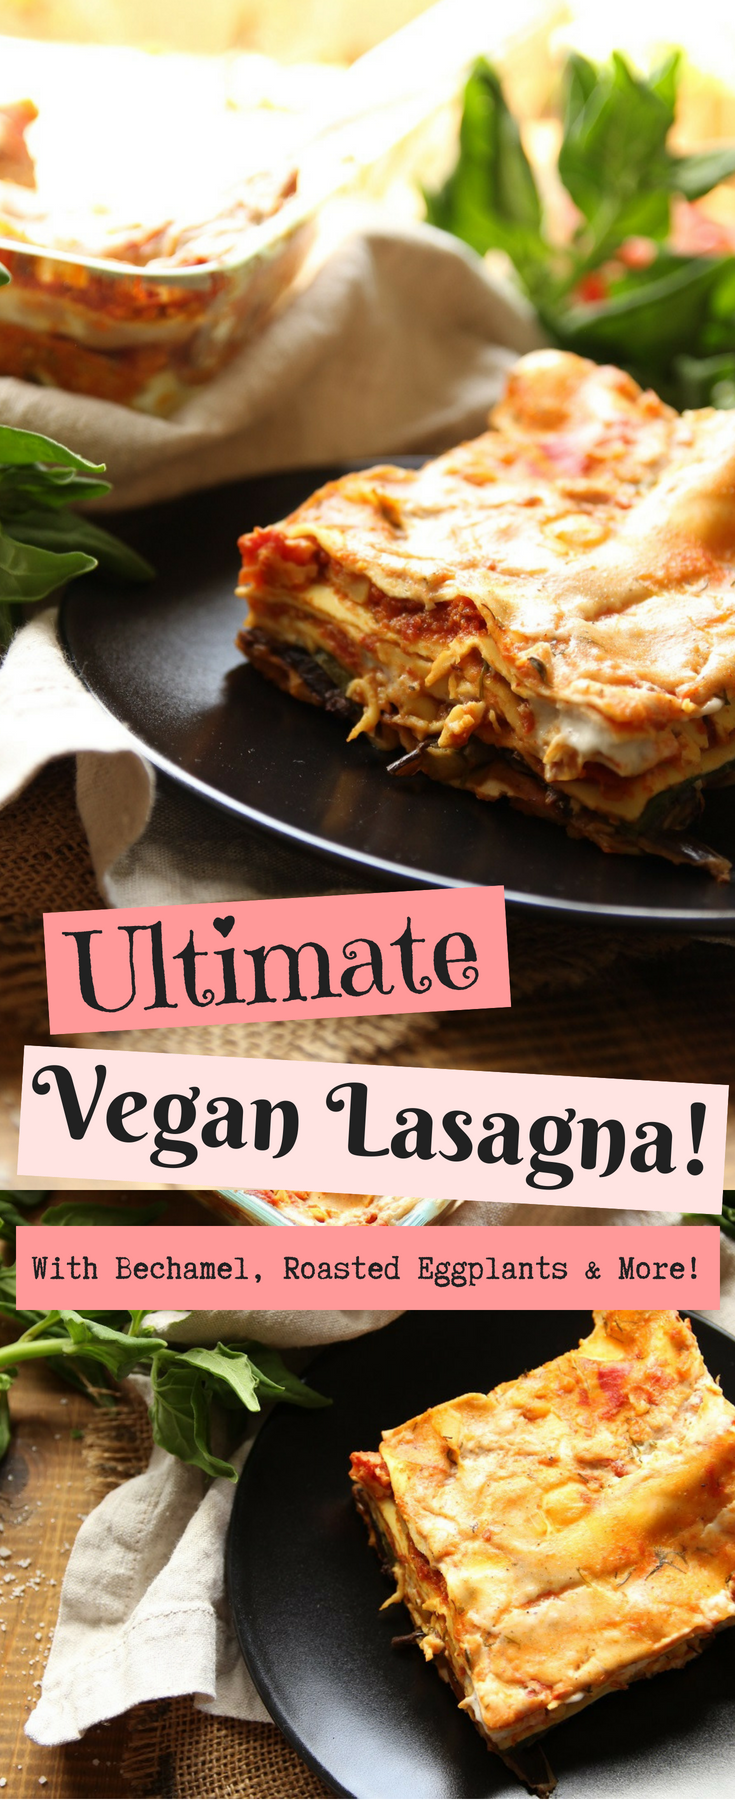 Vegan Lasagna recipe